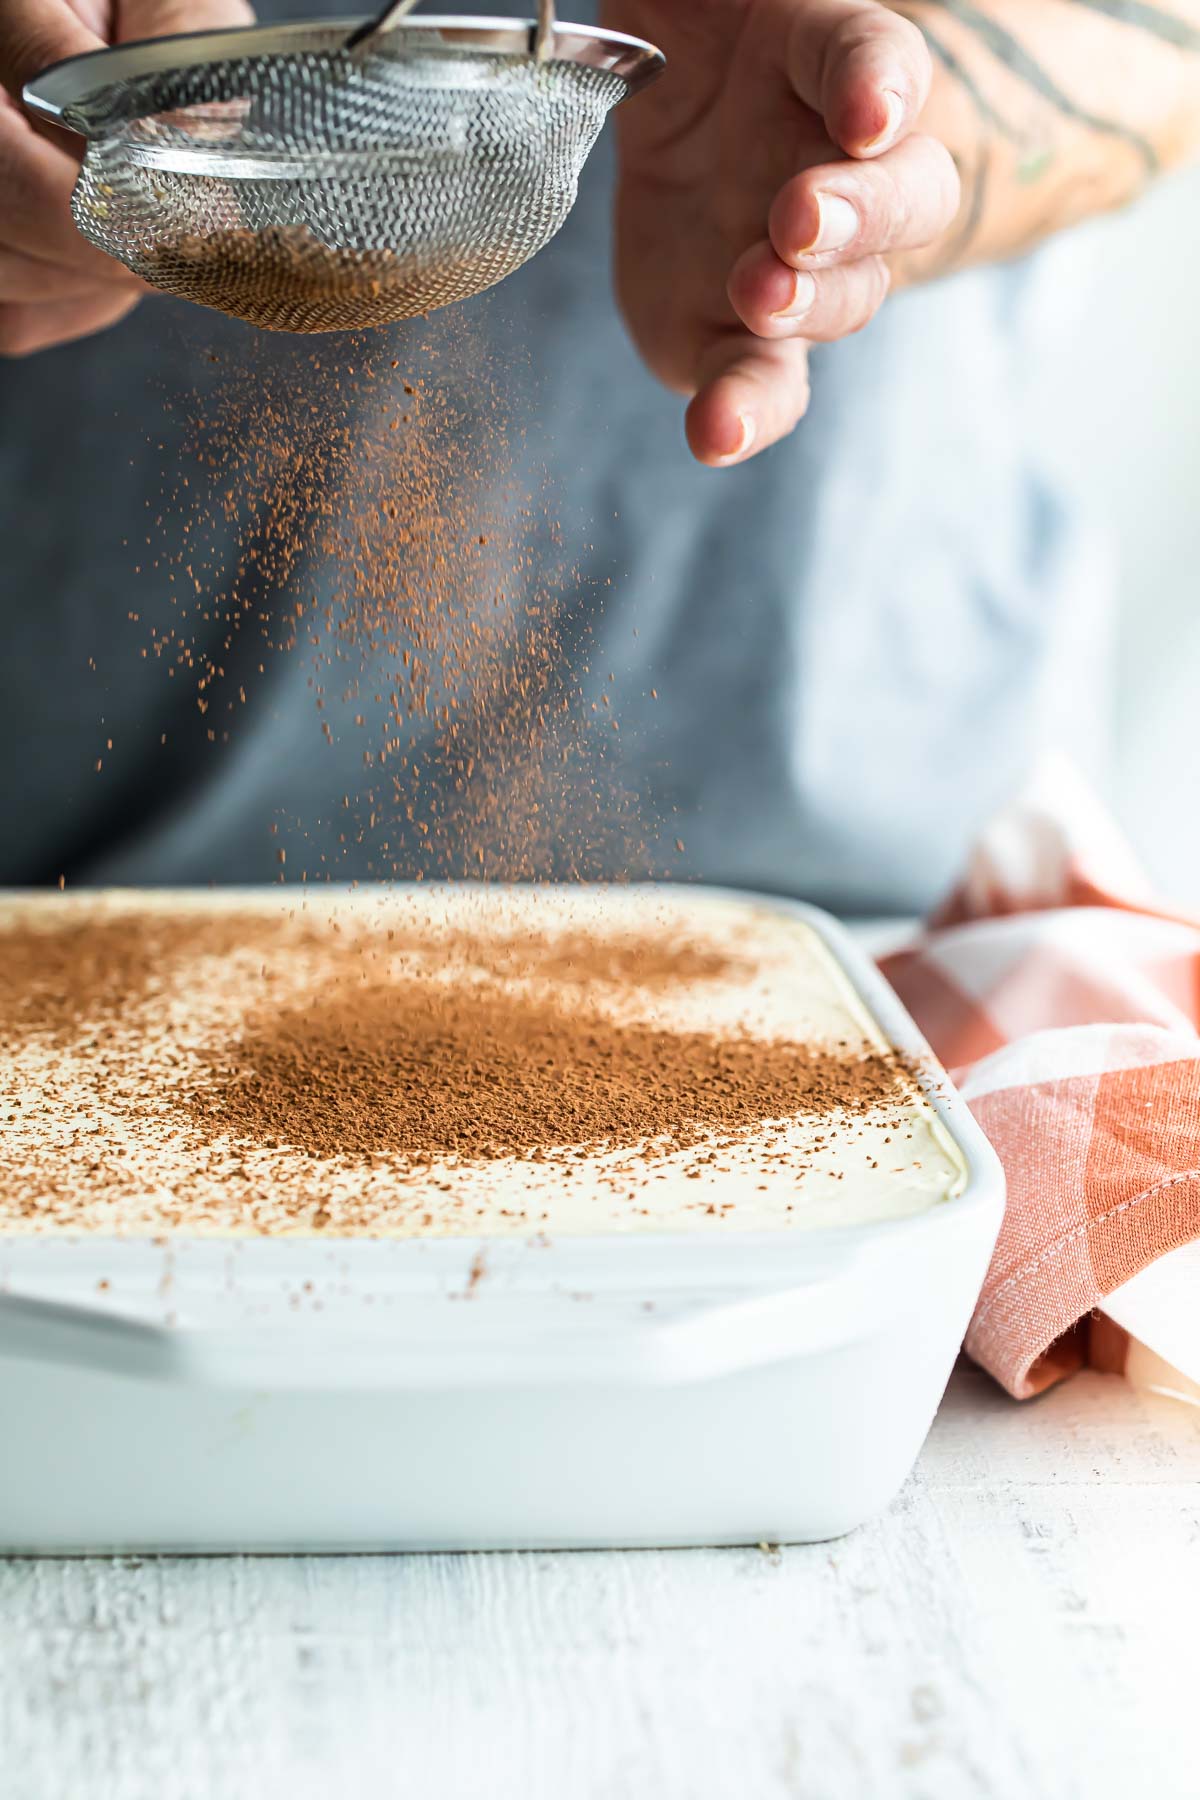 Tiramisu being dusted with cocoa powder.